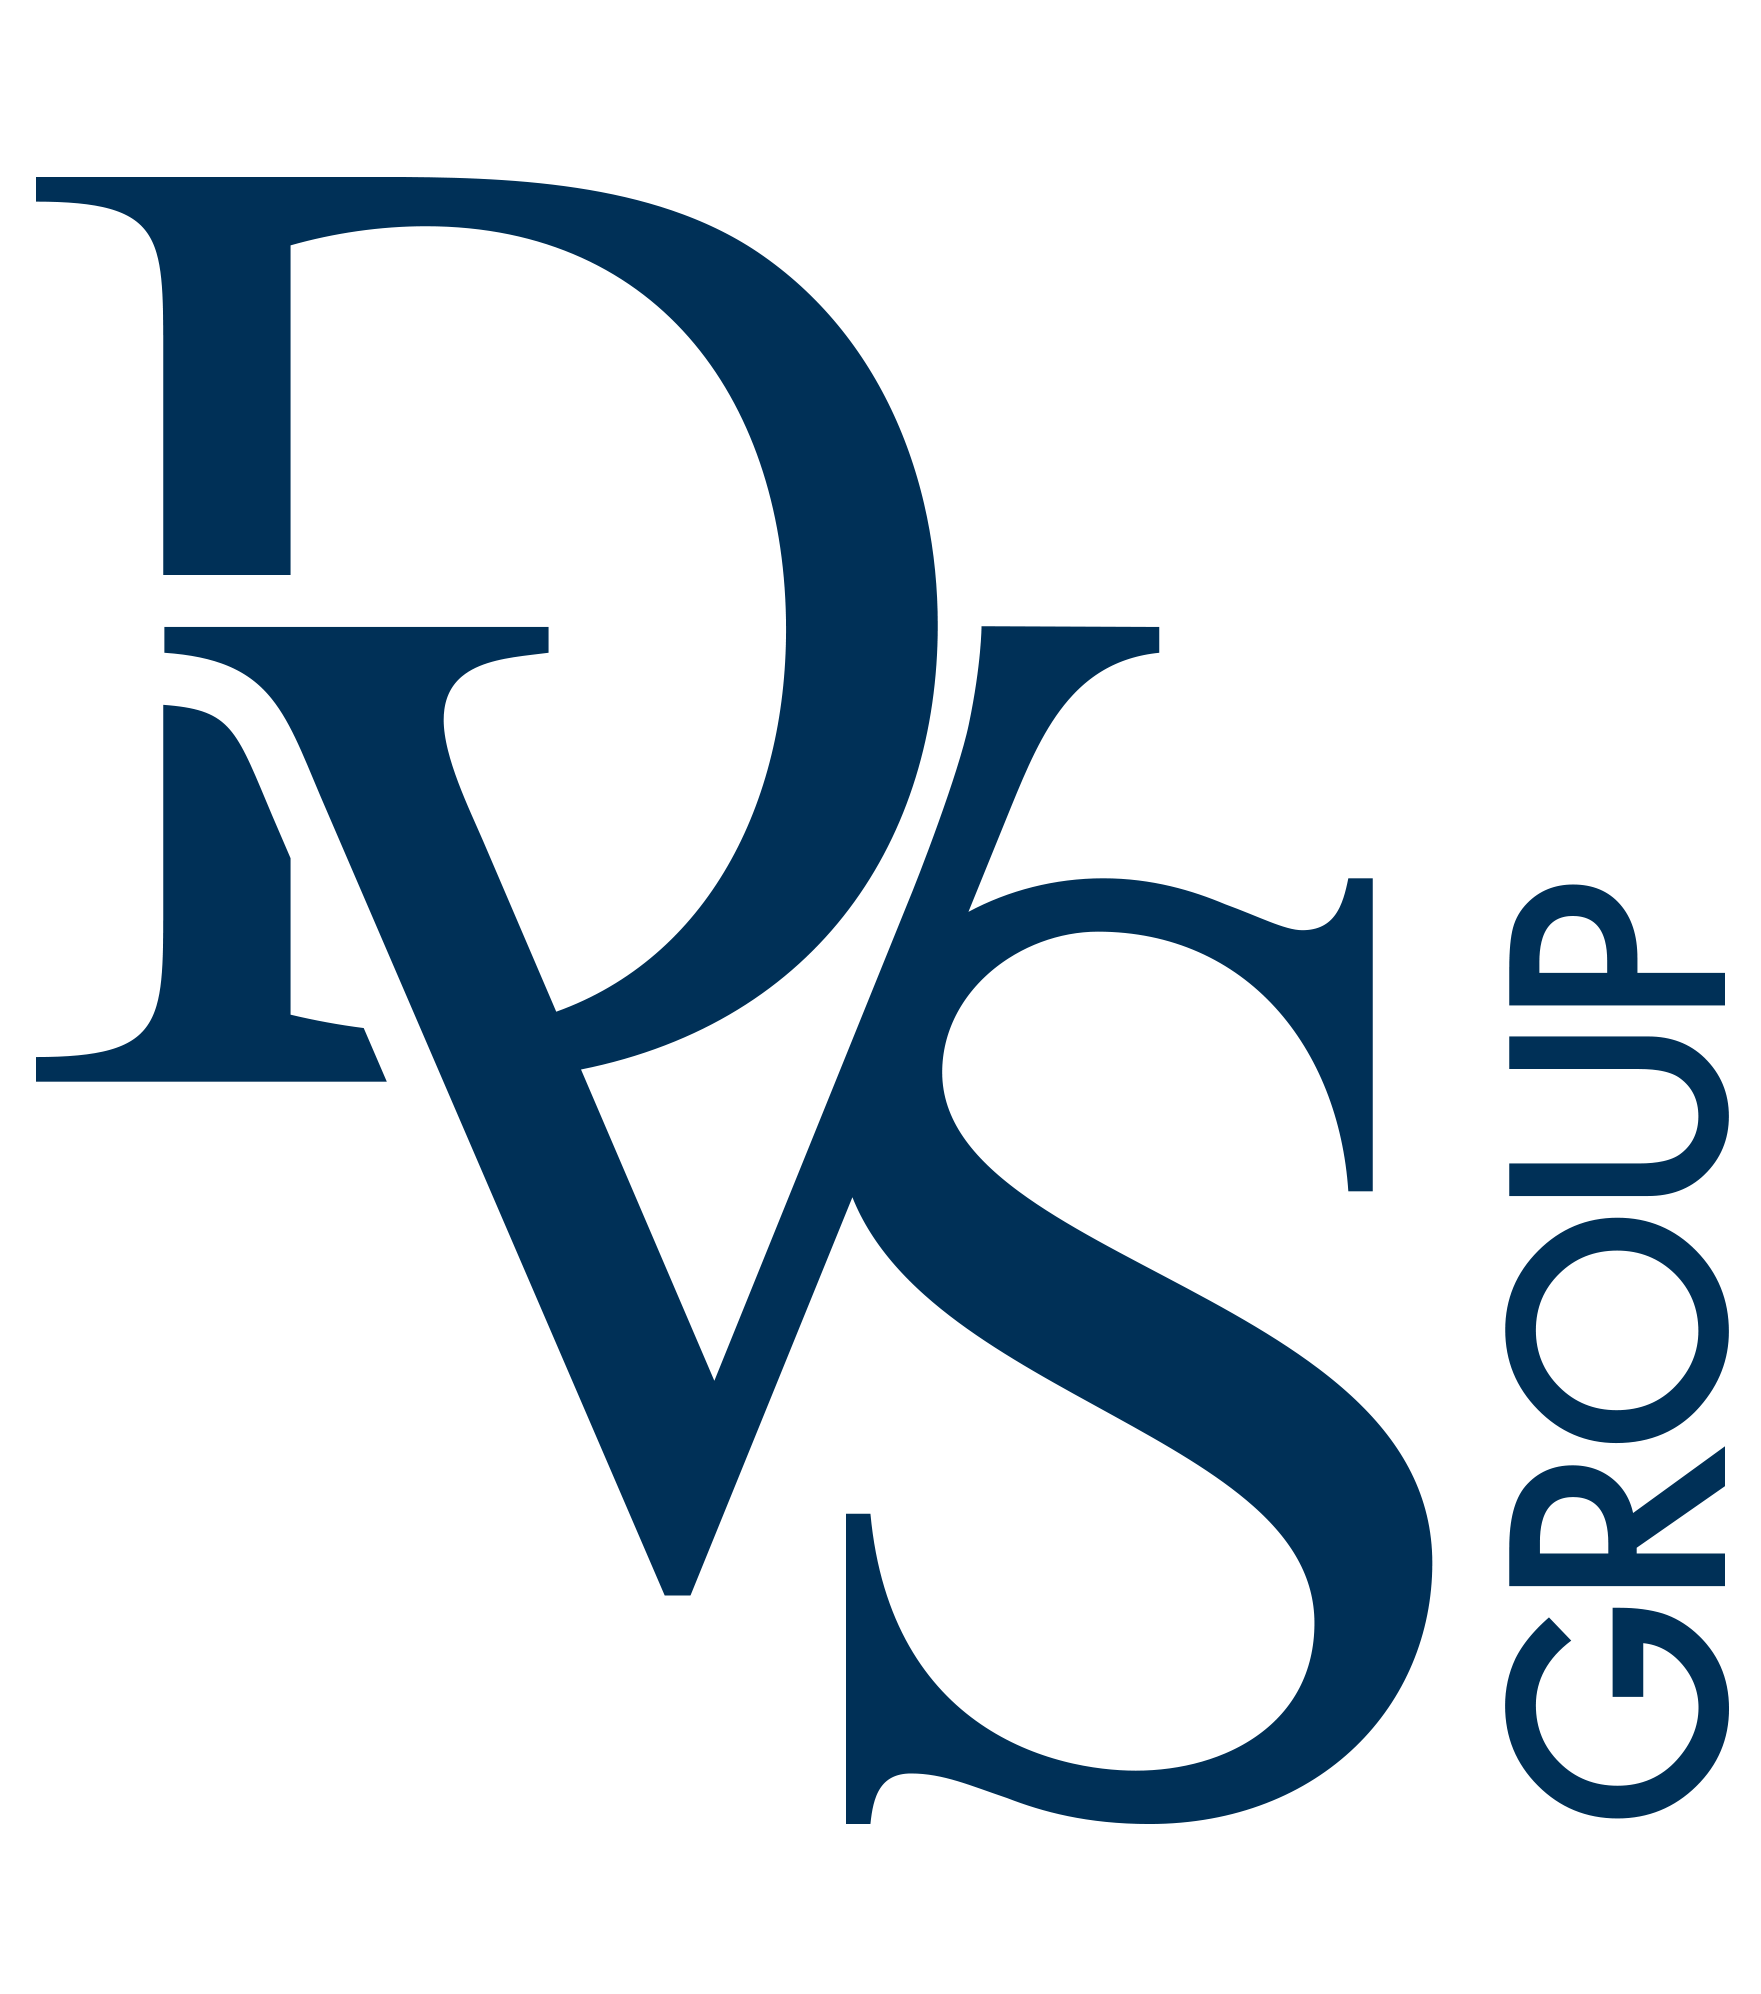 The DVS Group